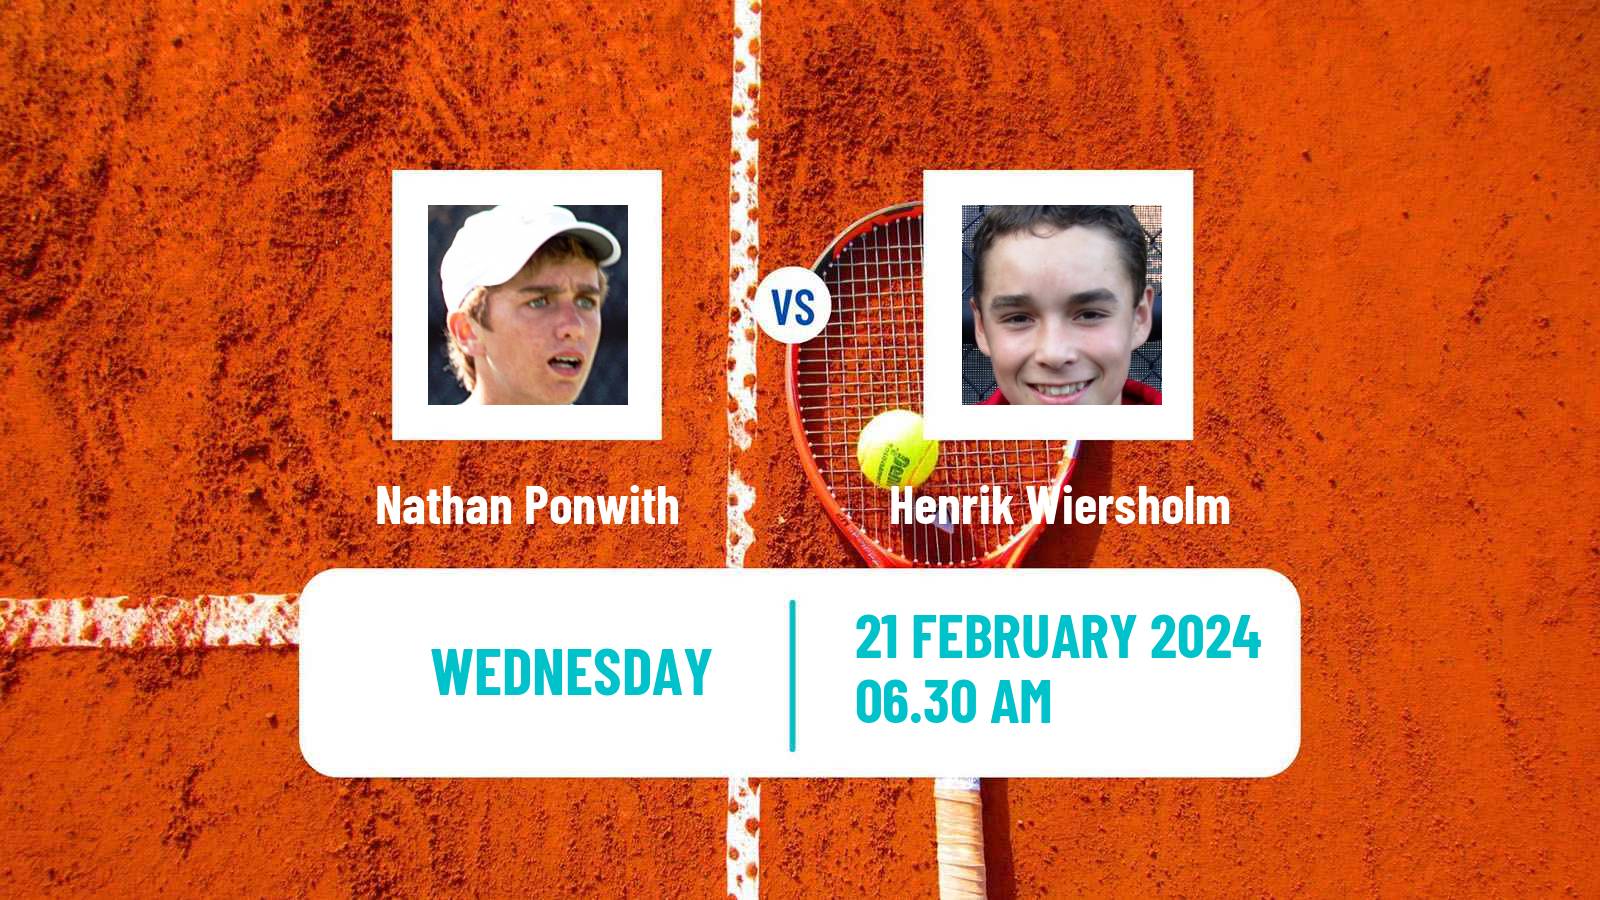 Tennis ITF M25 Vila Real De Santo Antonio 2 Men Nathan Ponwith - Henrik Wiersholm